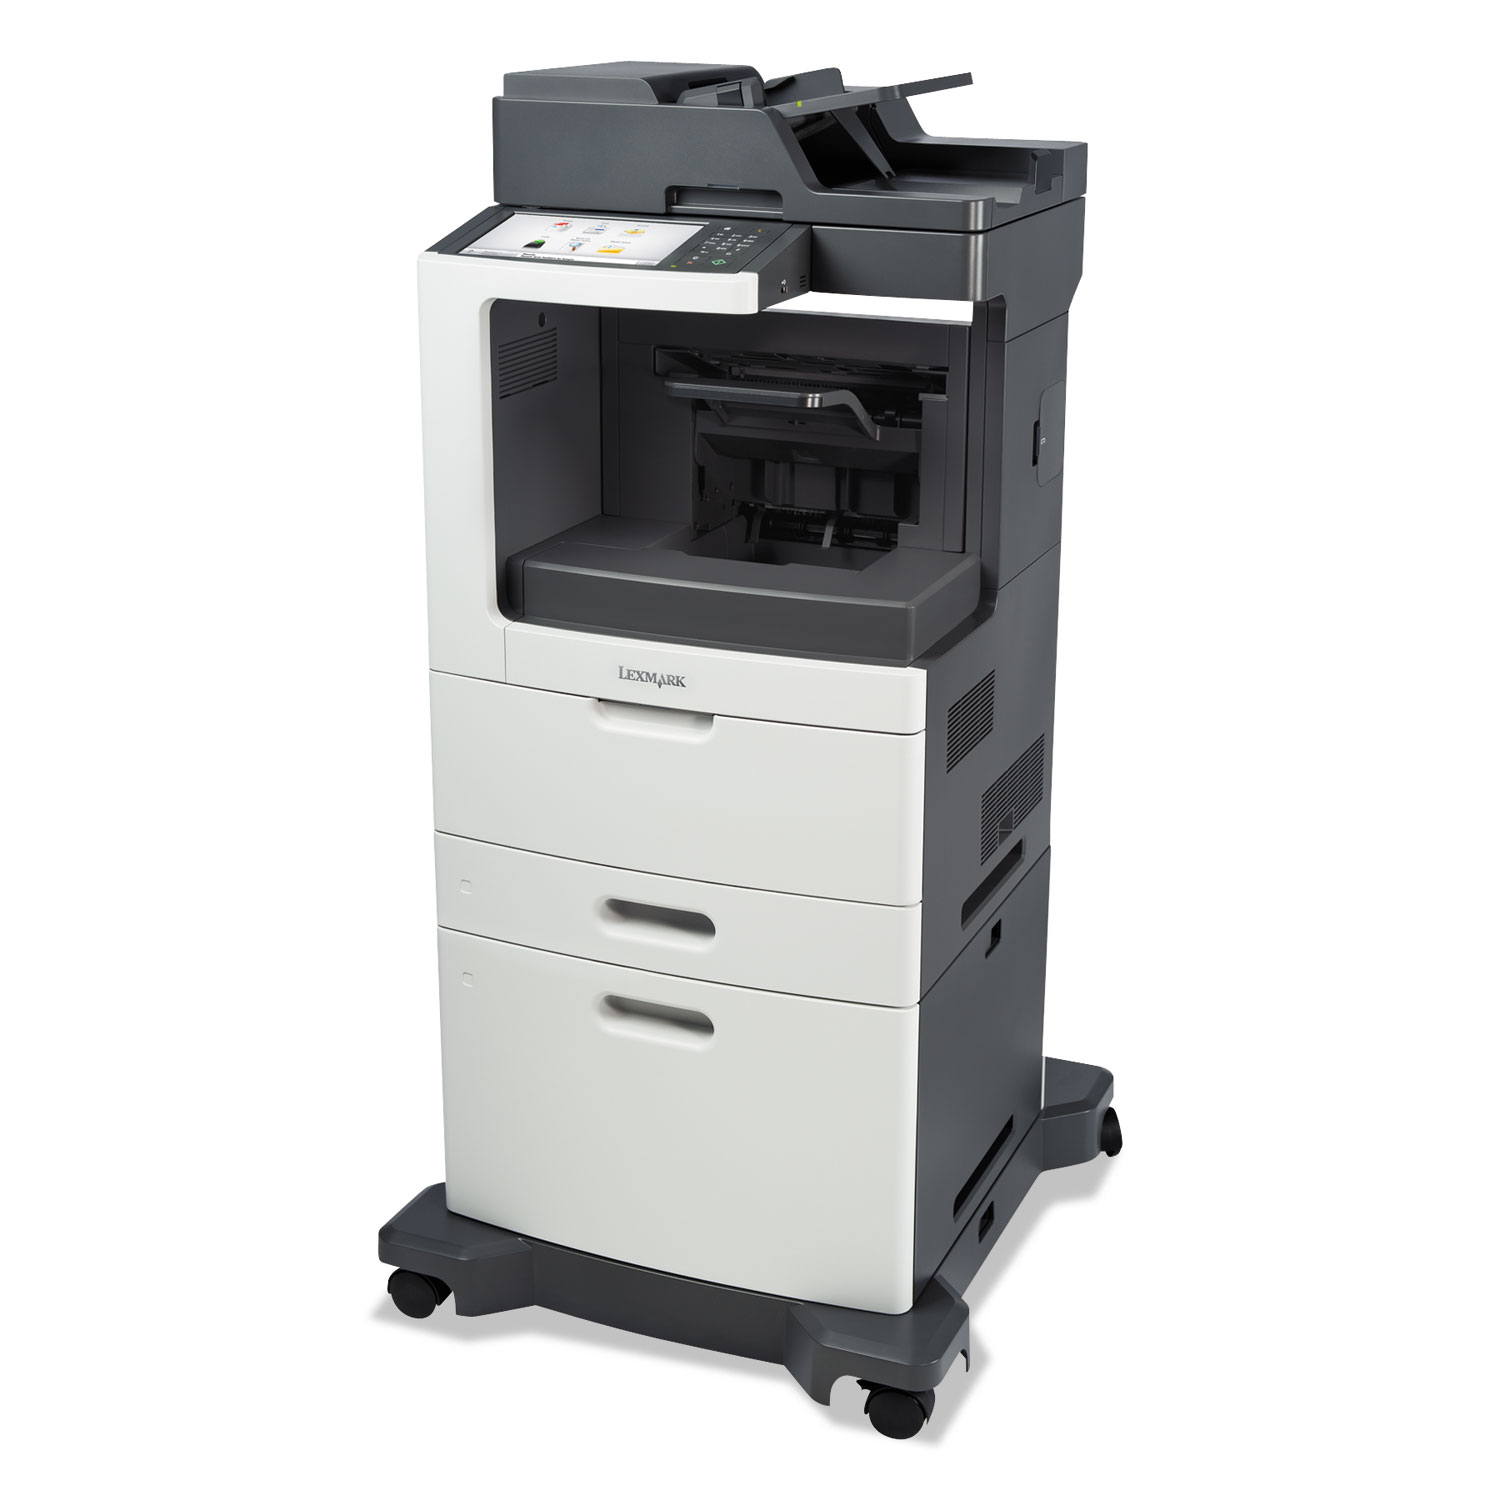 MX812dxe Multifunction Laser Printer, Copy/Fax/Print/Scan